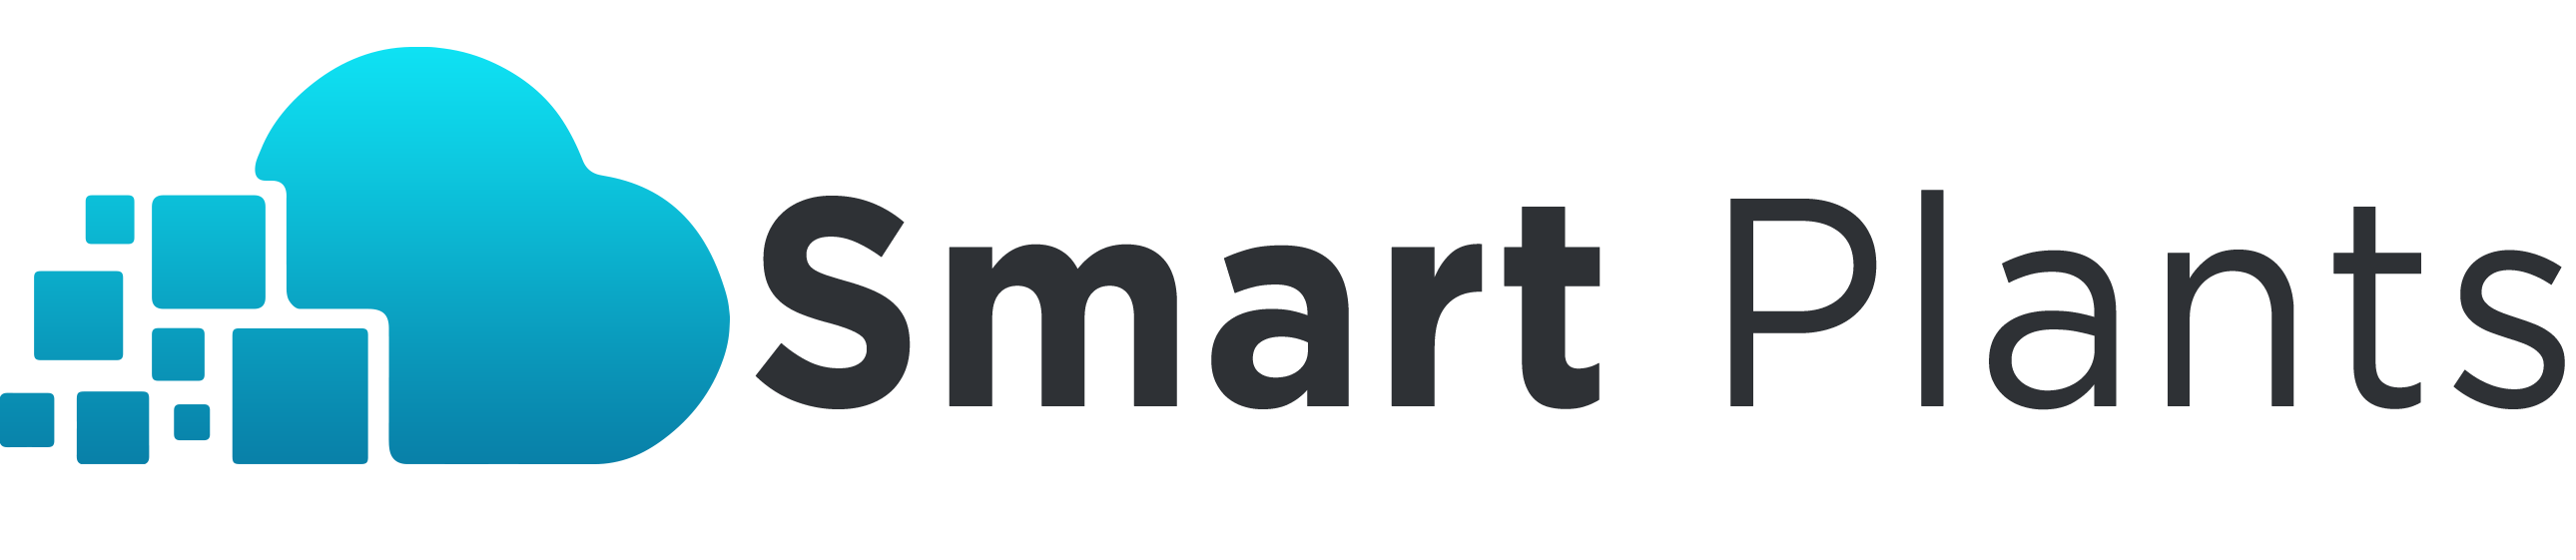 Smart Plants logo